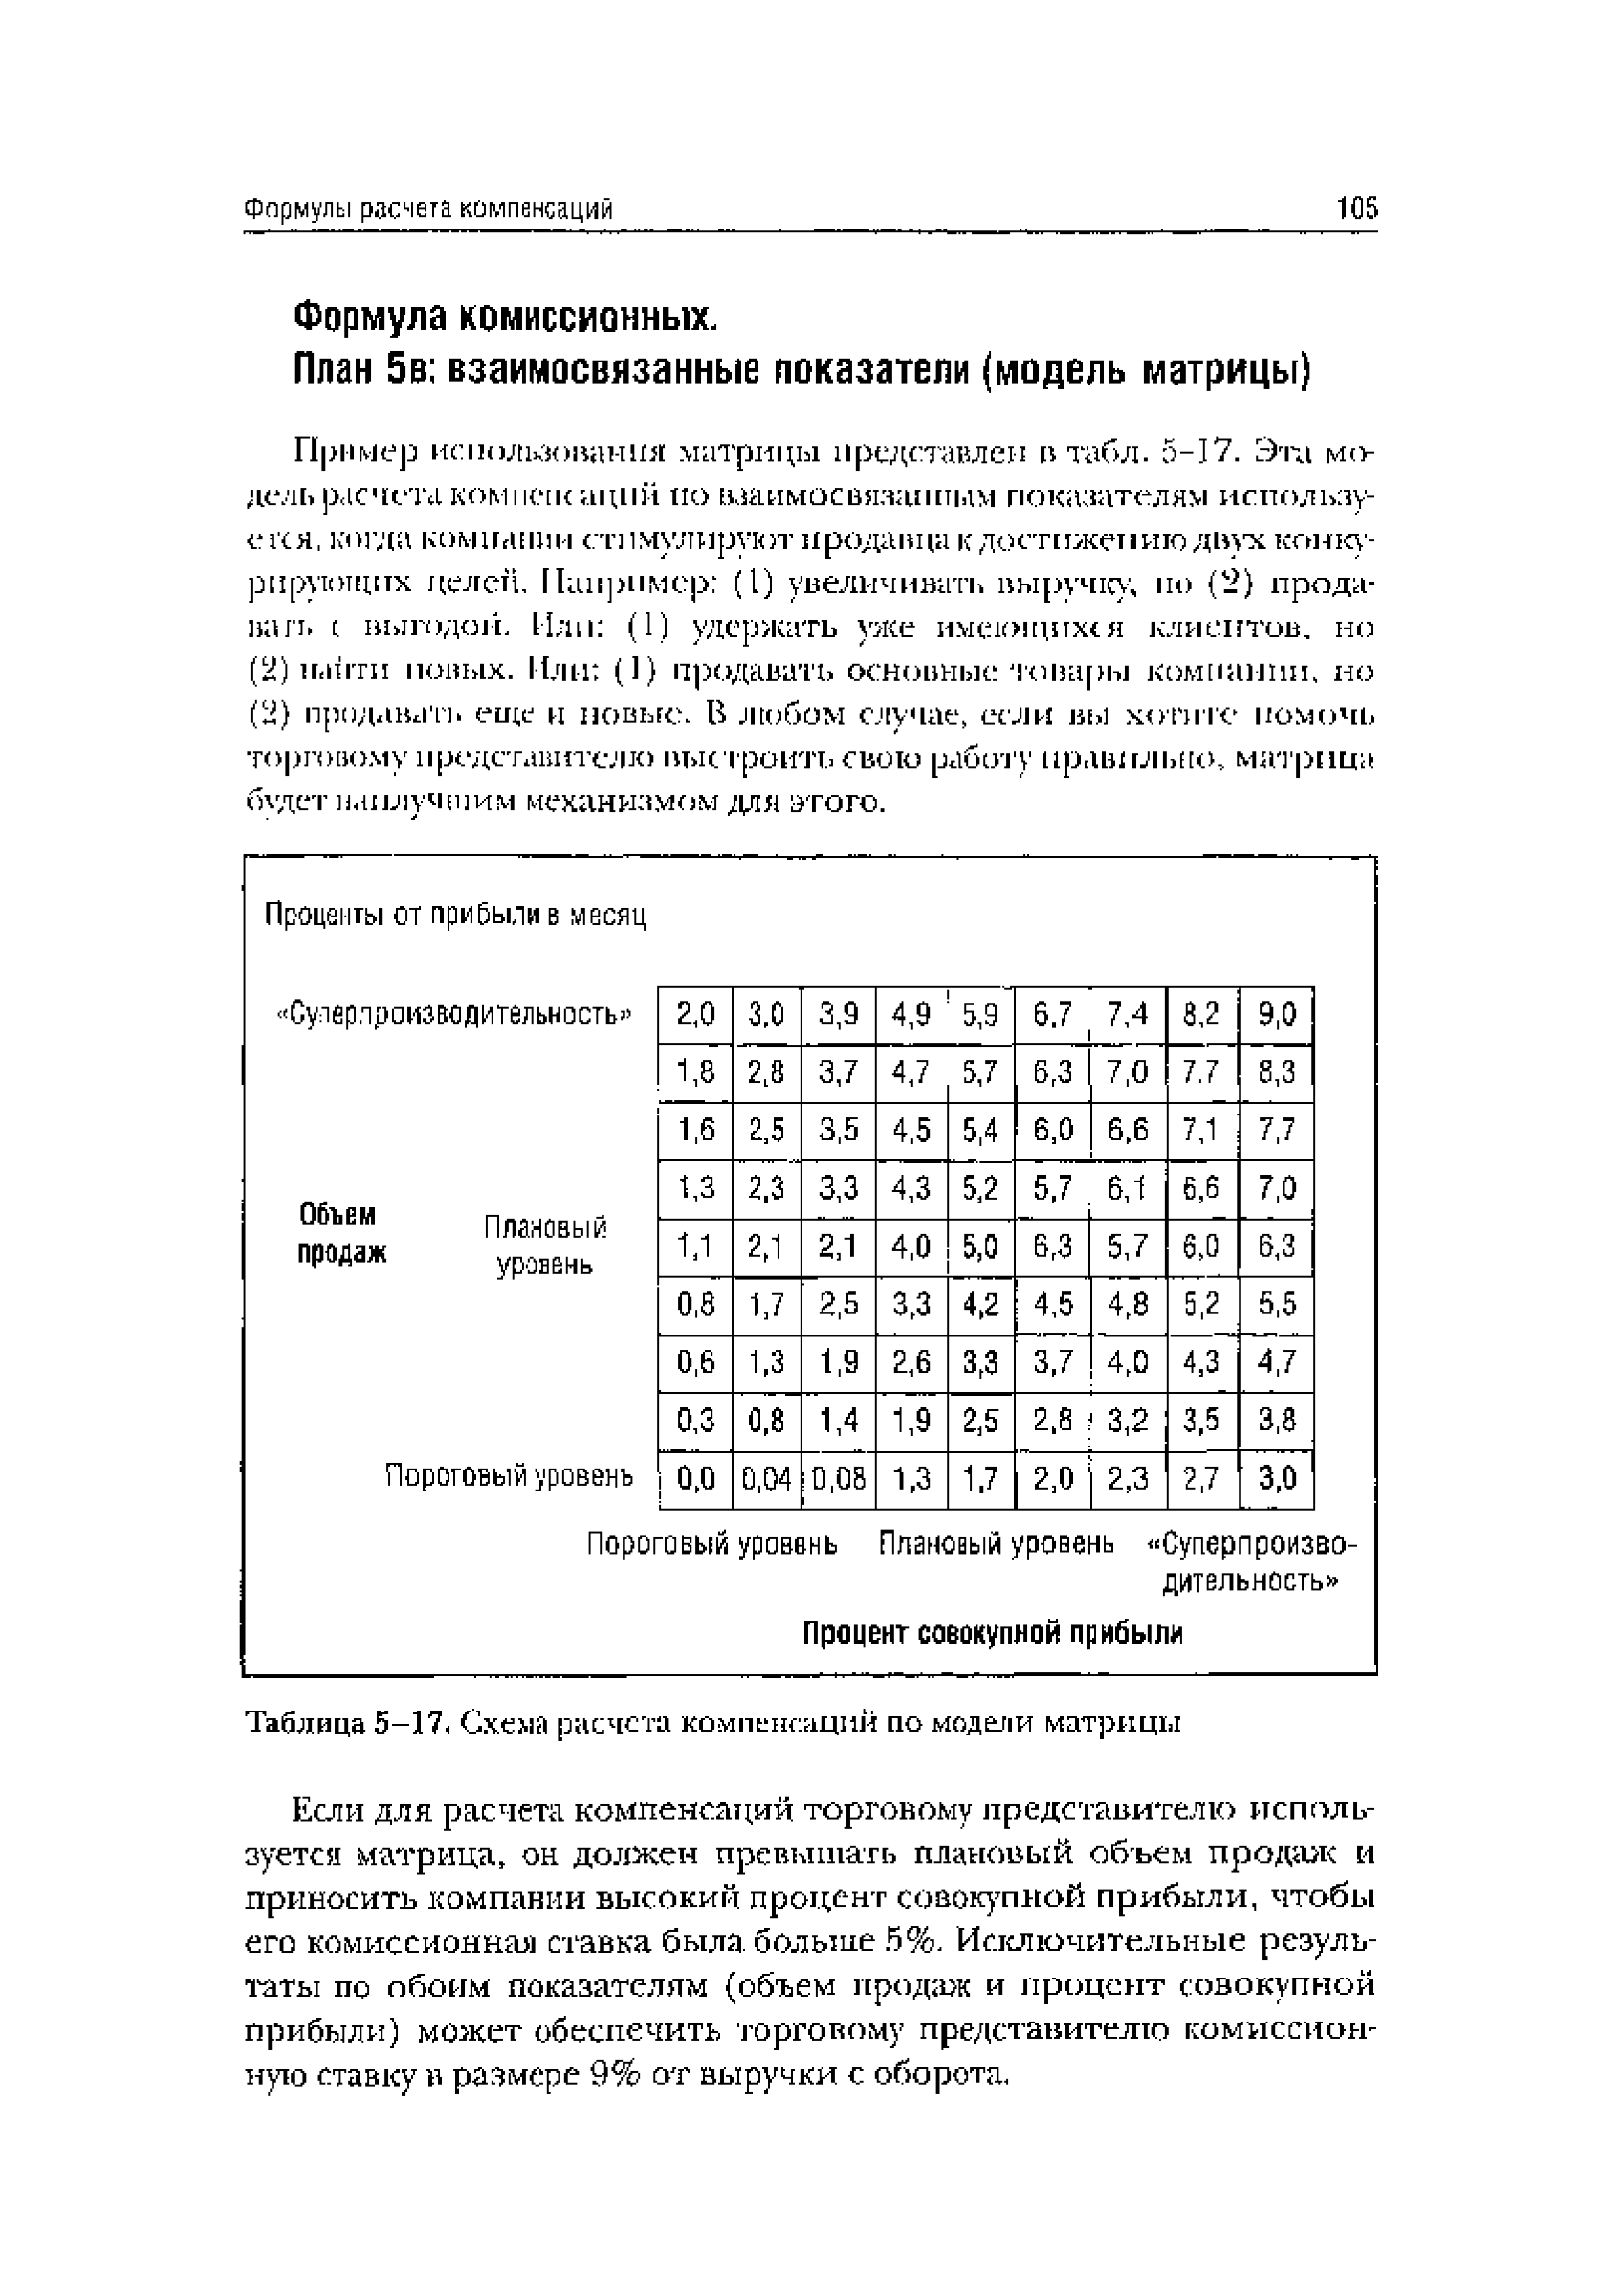 Таблица 5-17, Схема ряс чета компенсации по модели матрицы
